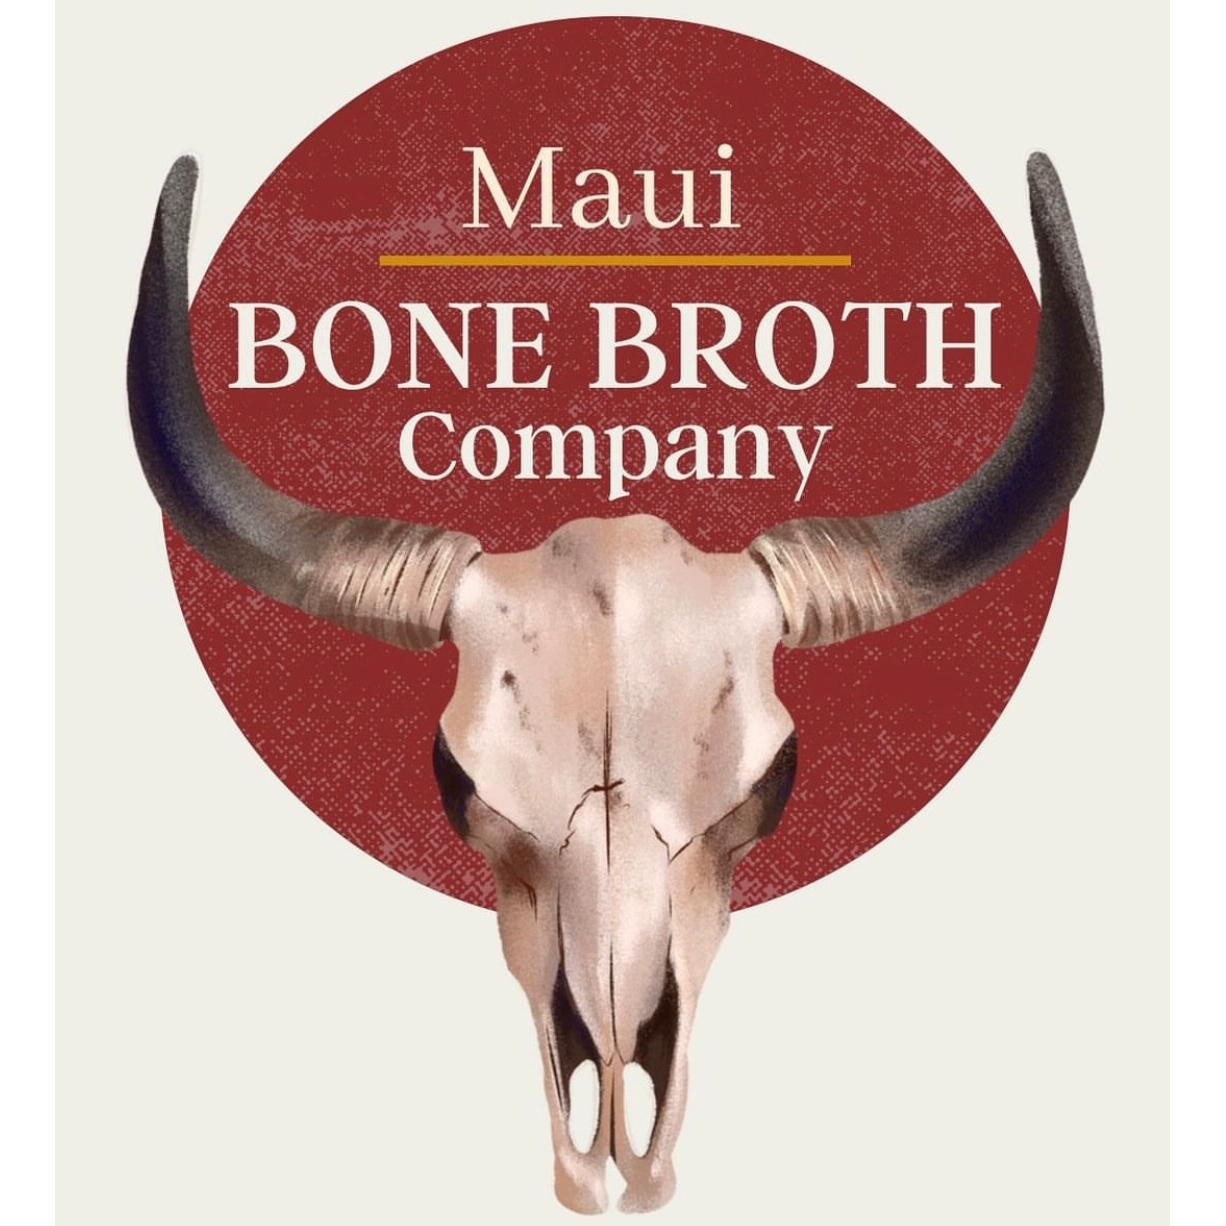 MauI Bone Broth Company